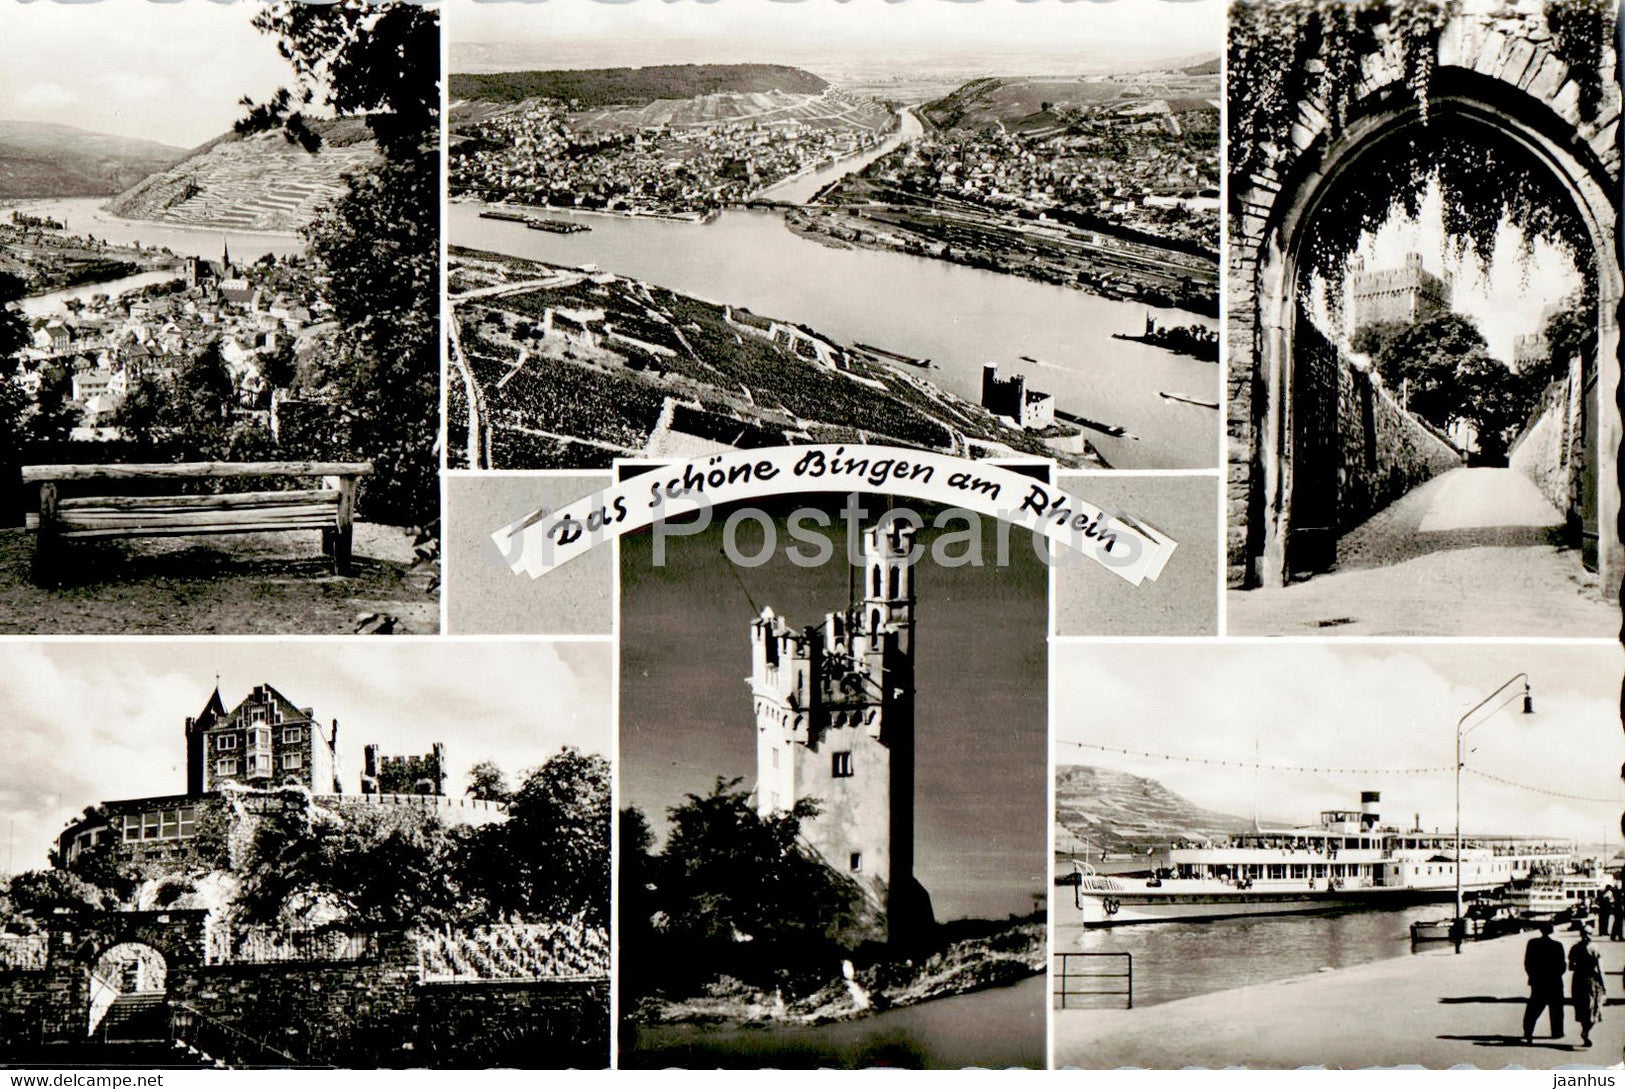 Das schone Bingen am Rhein - ship - old postcard - Germany - unused - JH Postcards